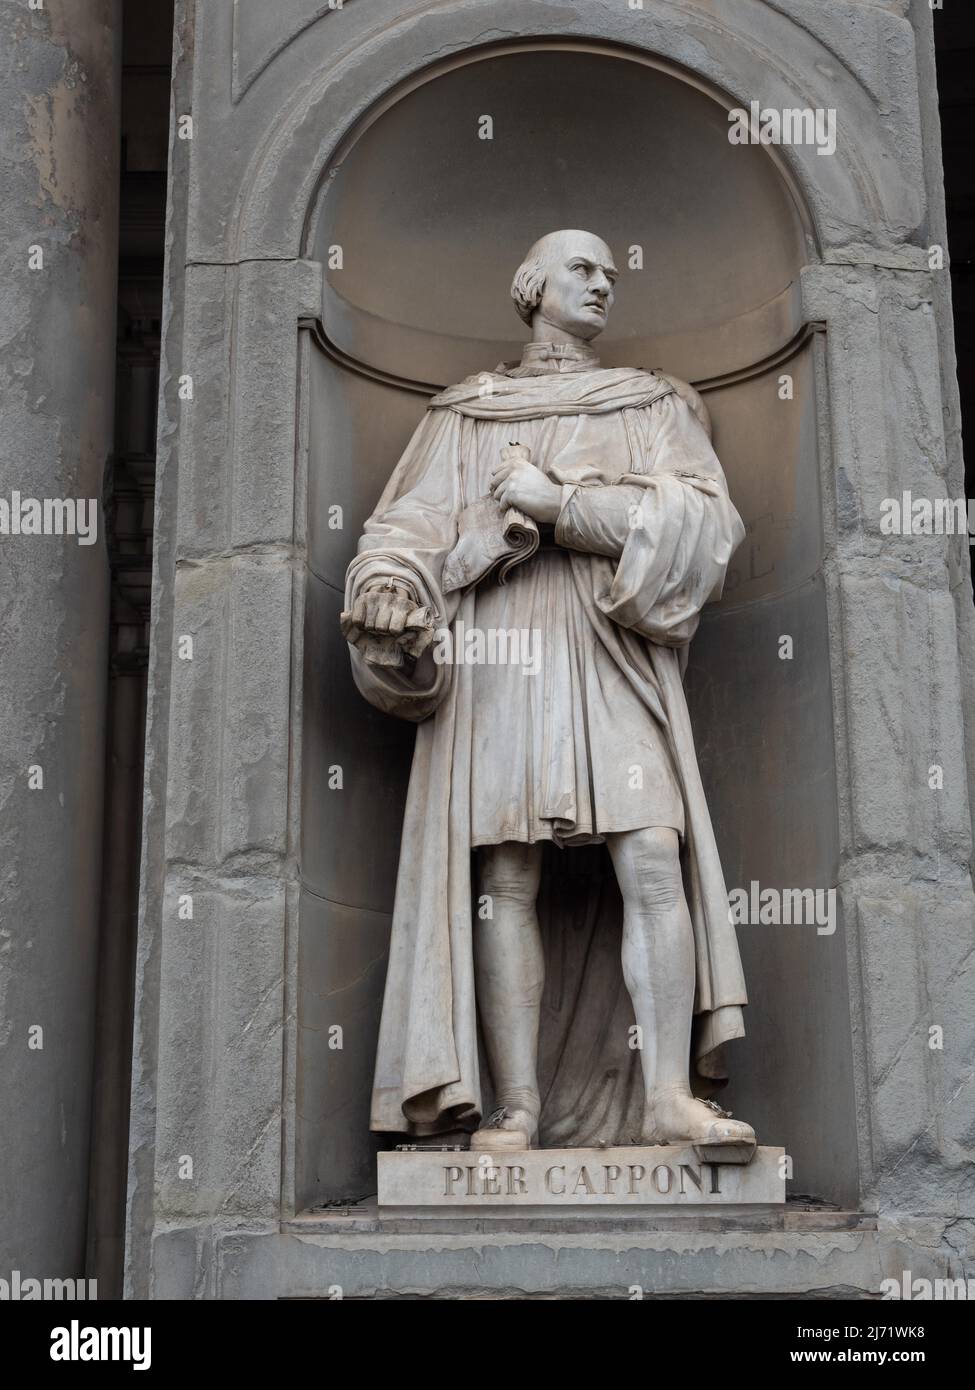 Statua, Pier Capponi, fiorentinischer Kaufmann, Politiker und Feldherr, Uffizien, Florenz, Italia Foto Stock